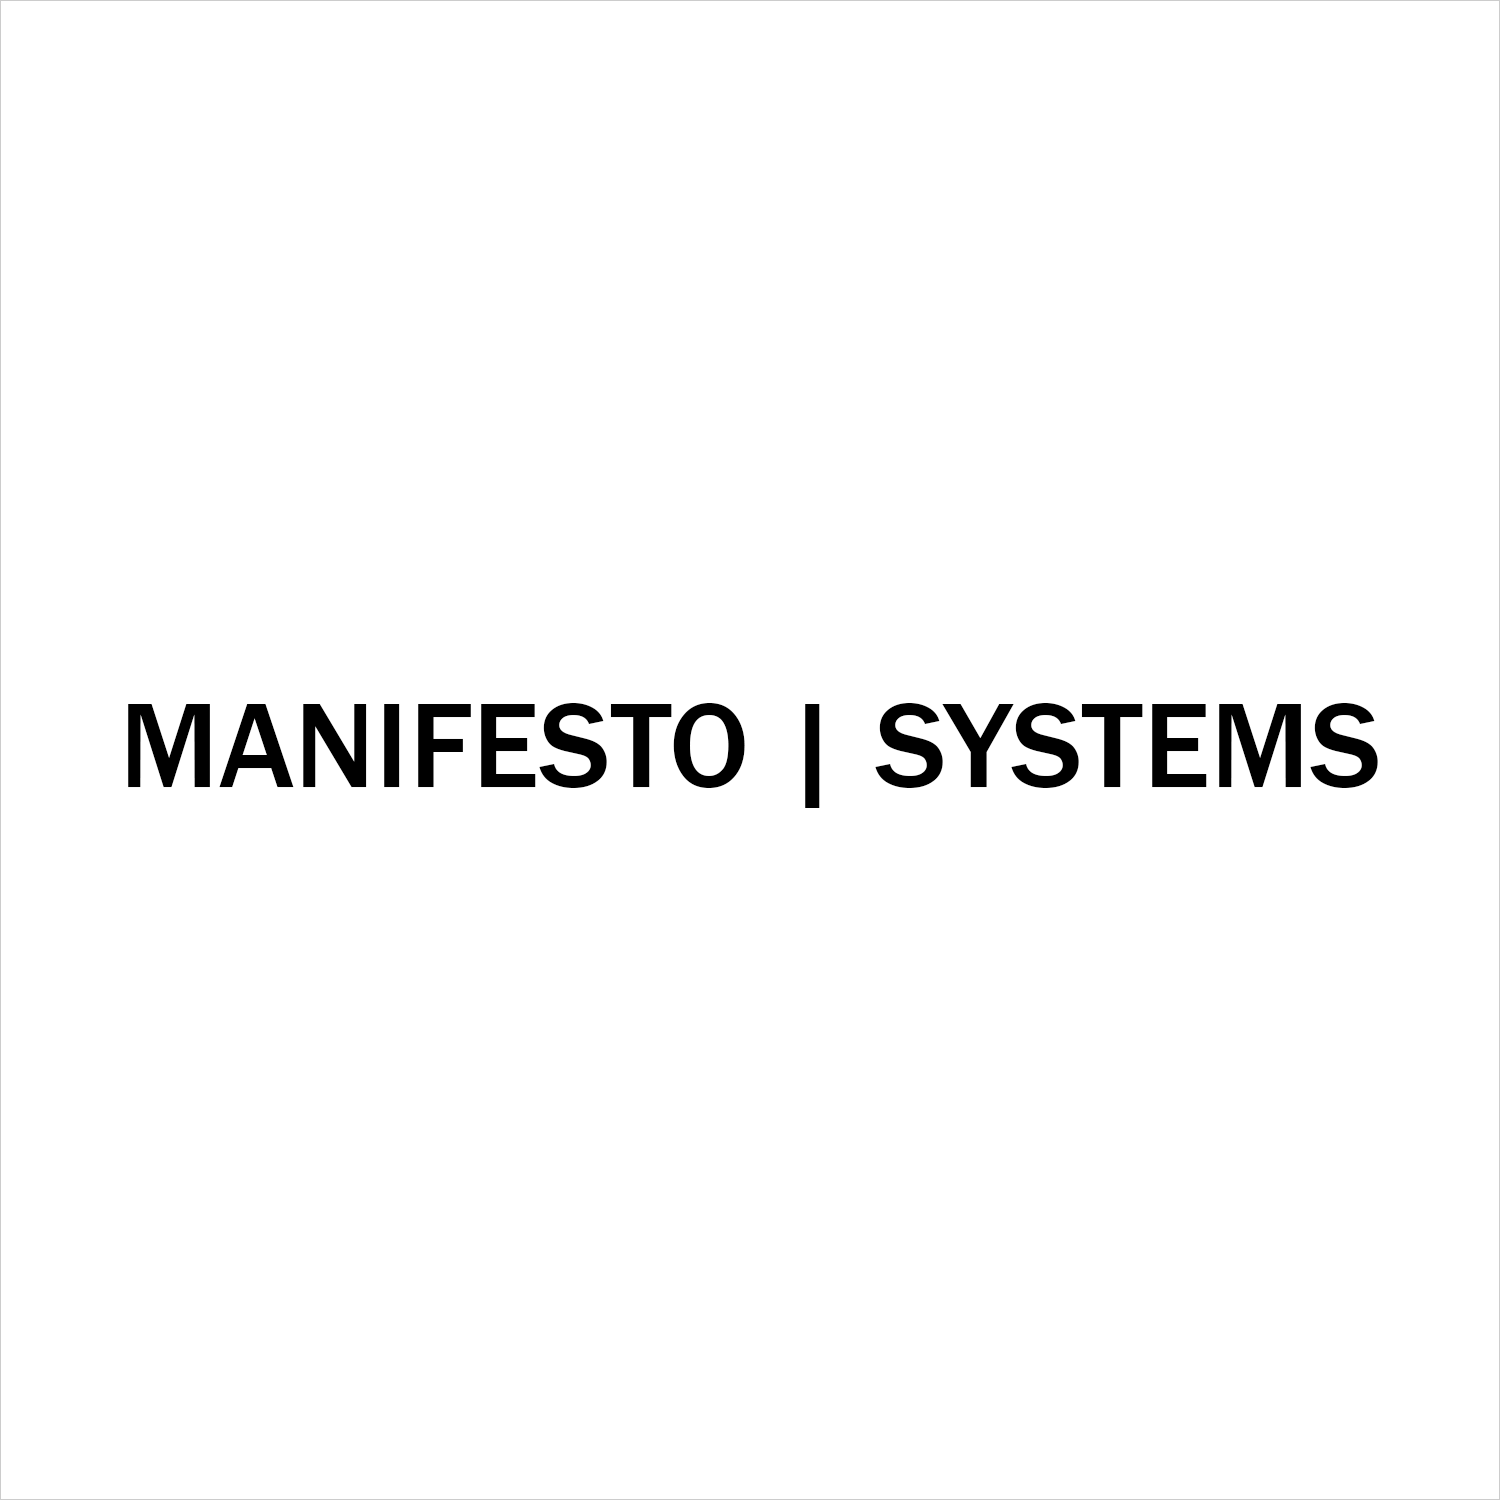 MANIFESTO | SYSTEMS